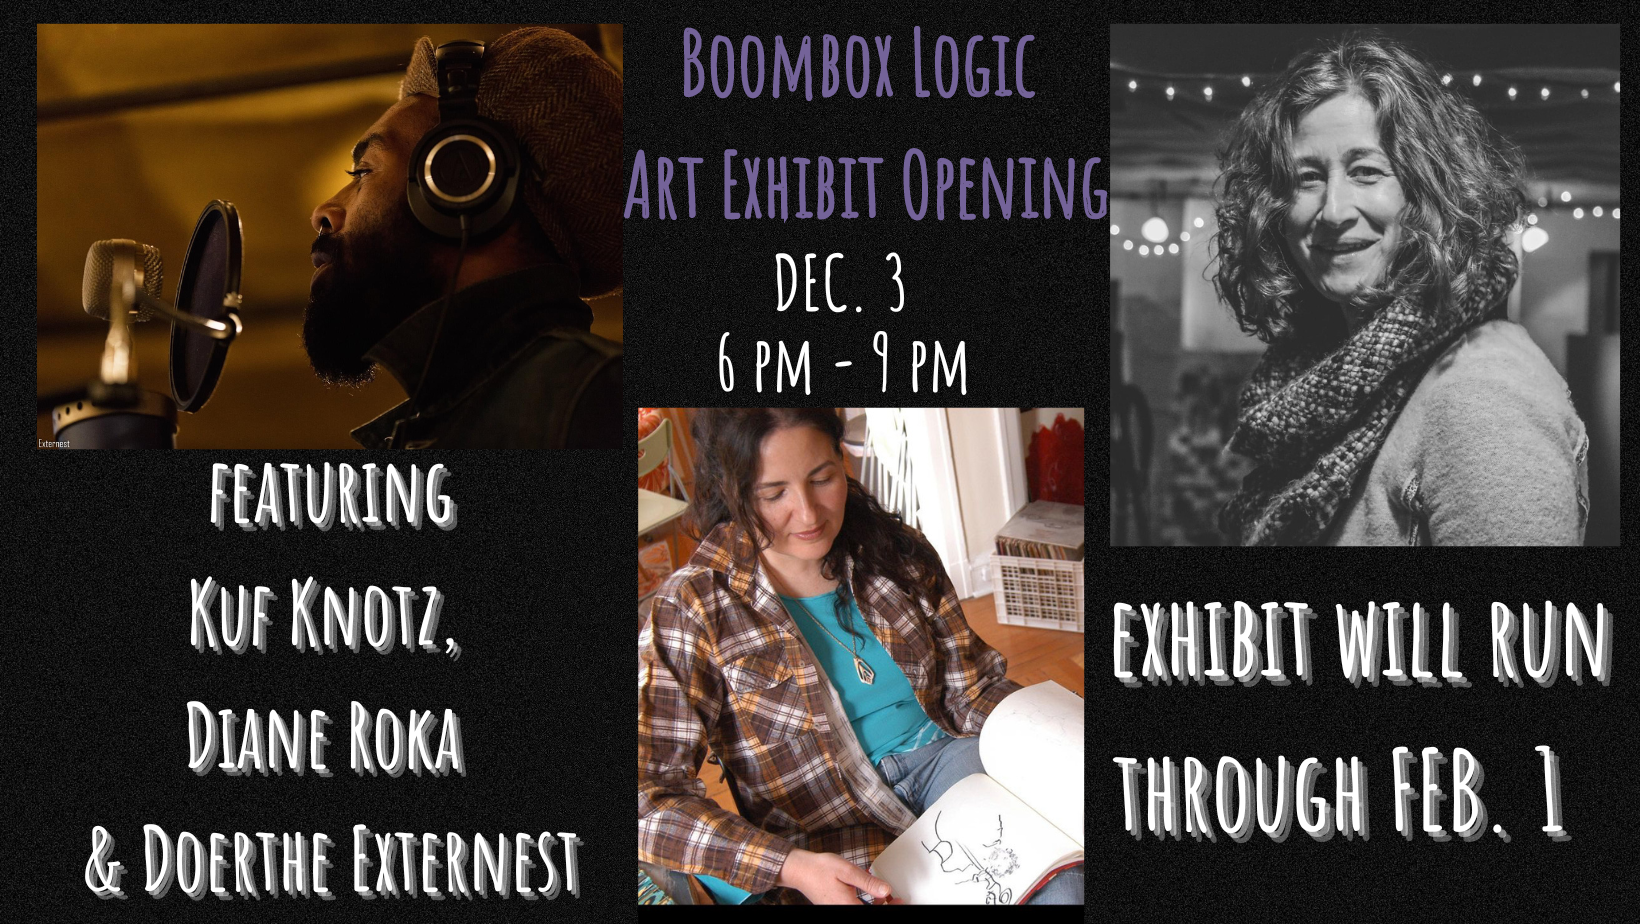 SUN. DEC. 3: Boombox Logic: Art Exhibit Opening featuring Kuf Knotz, Diane Roka and Doerthe Externest